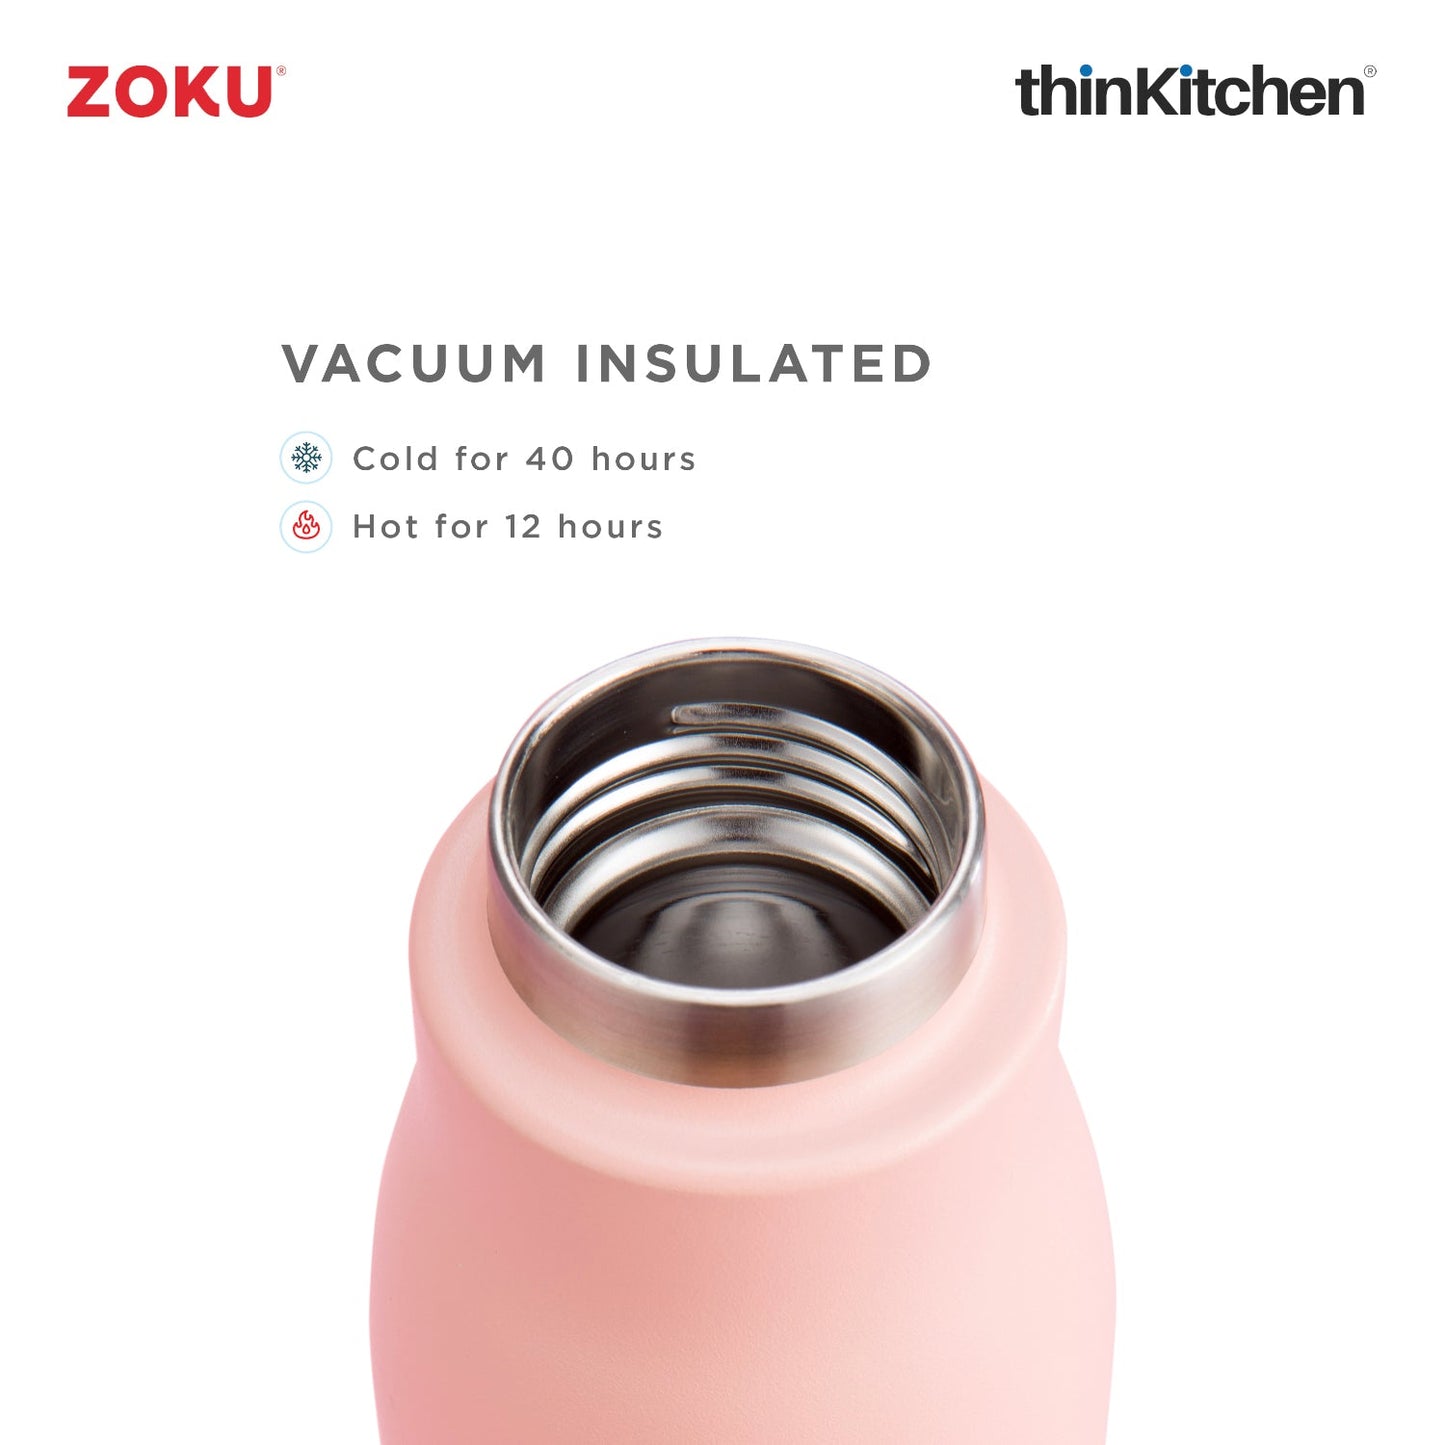 thinKitchen™ Zoku Coral Stainless Steel Bottle, 500ml